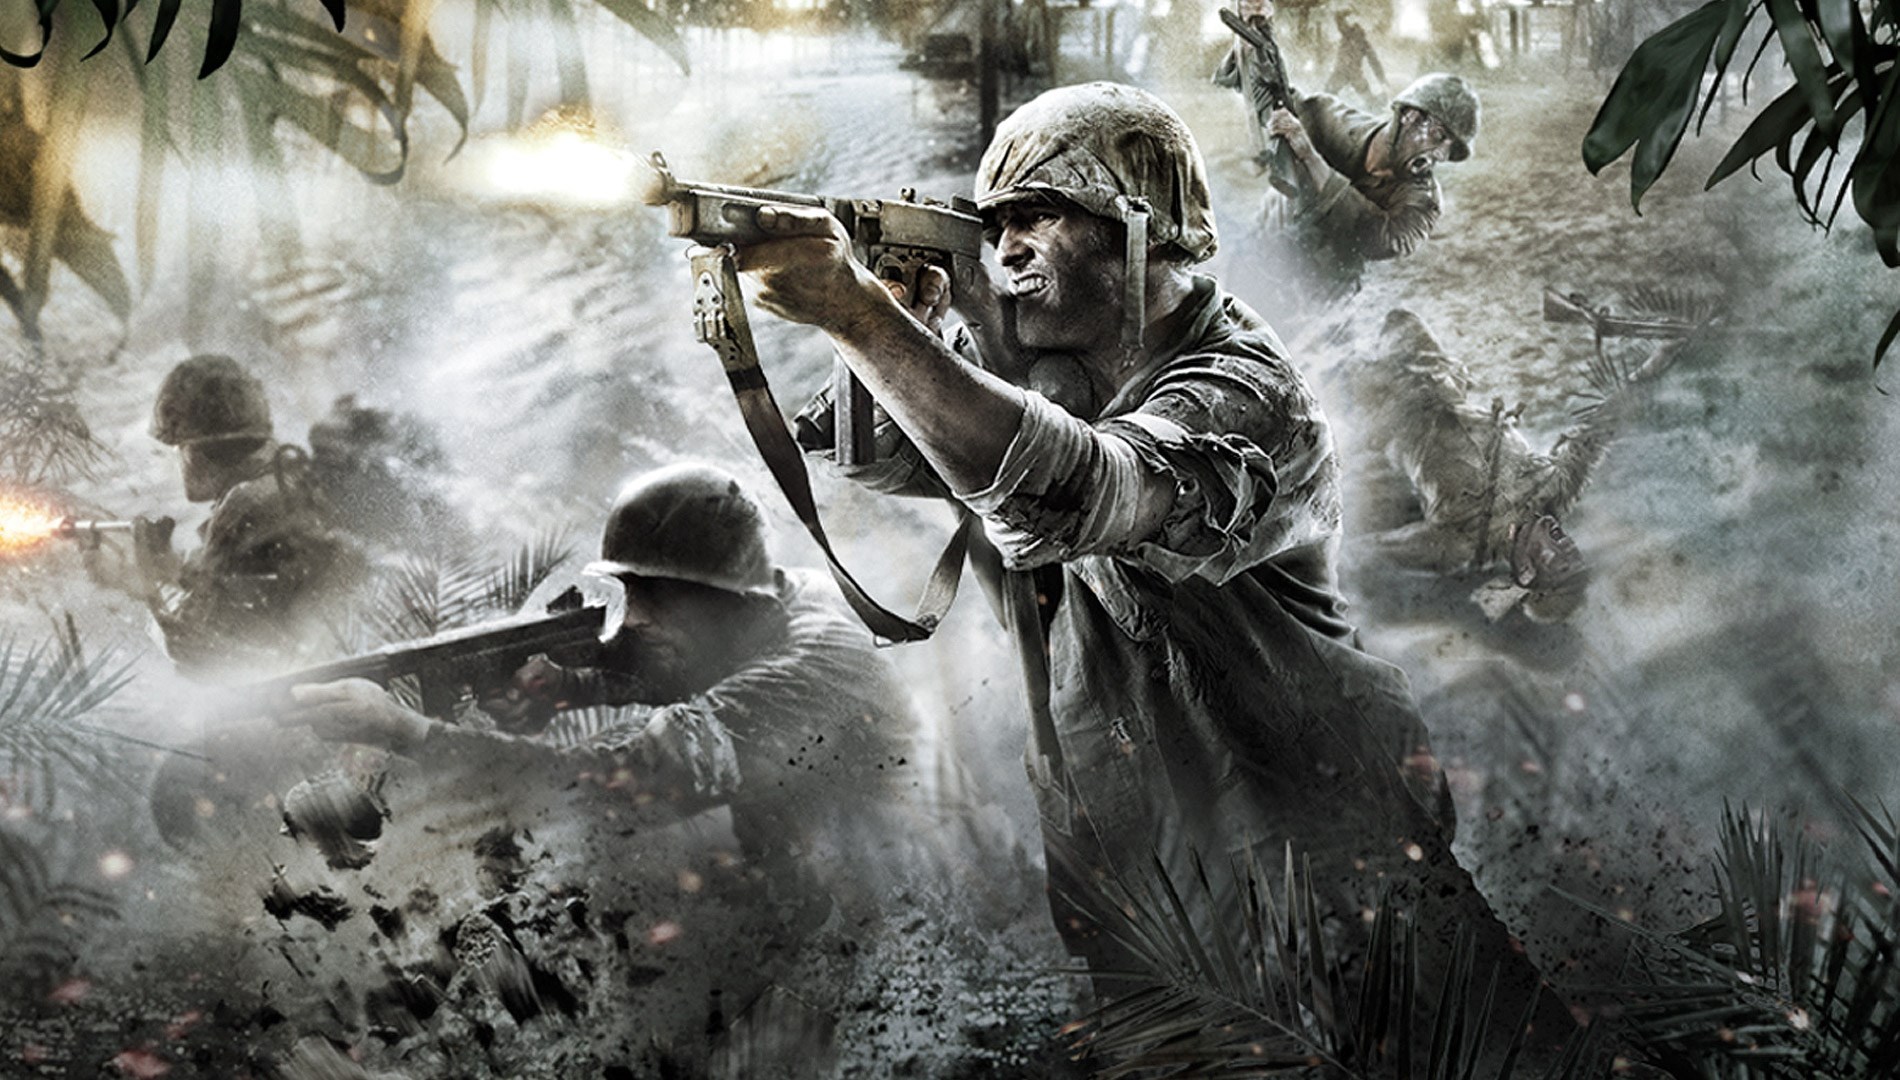 بازی Call Of Duty 5 World At War